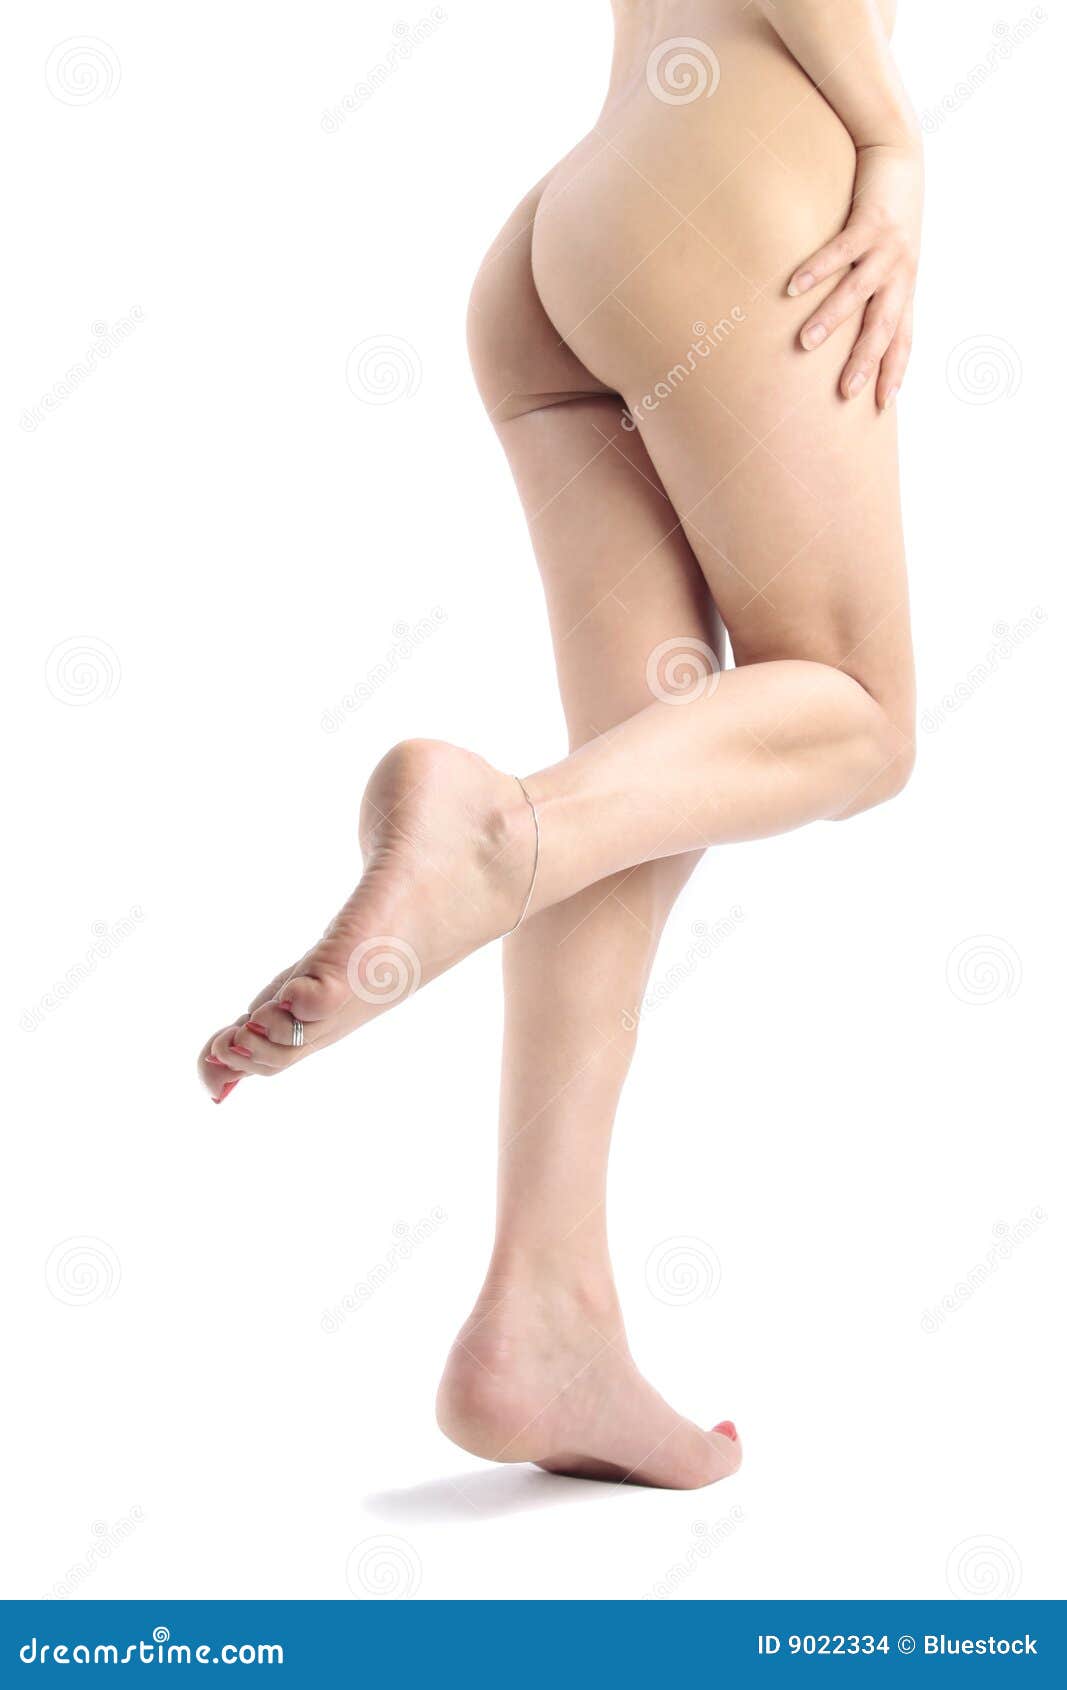 Best of Nude women with beautiful legs